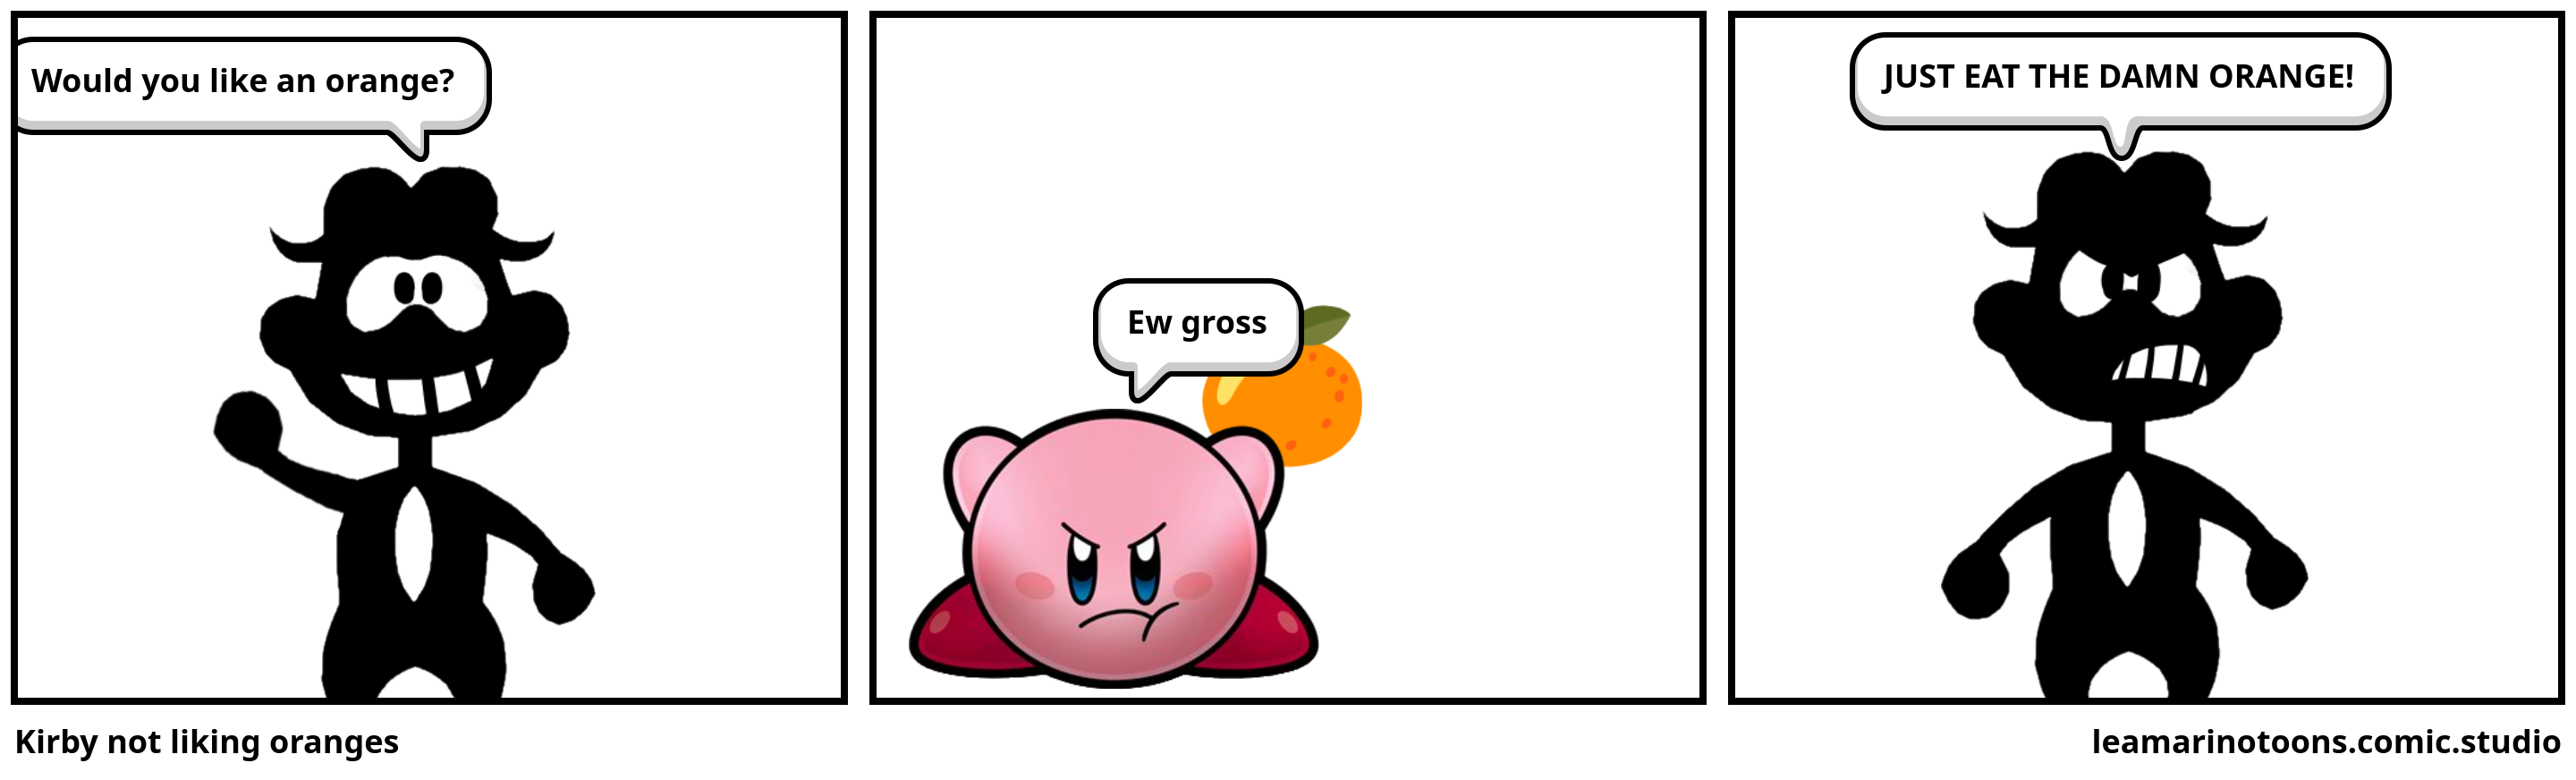 Kirby not liking oranges